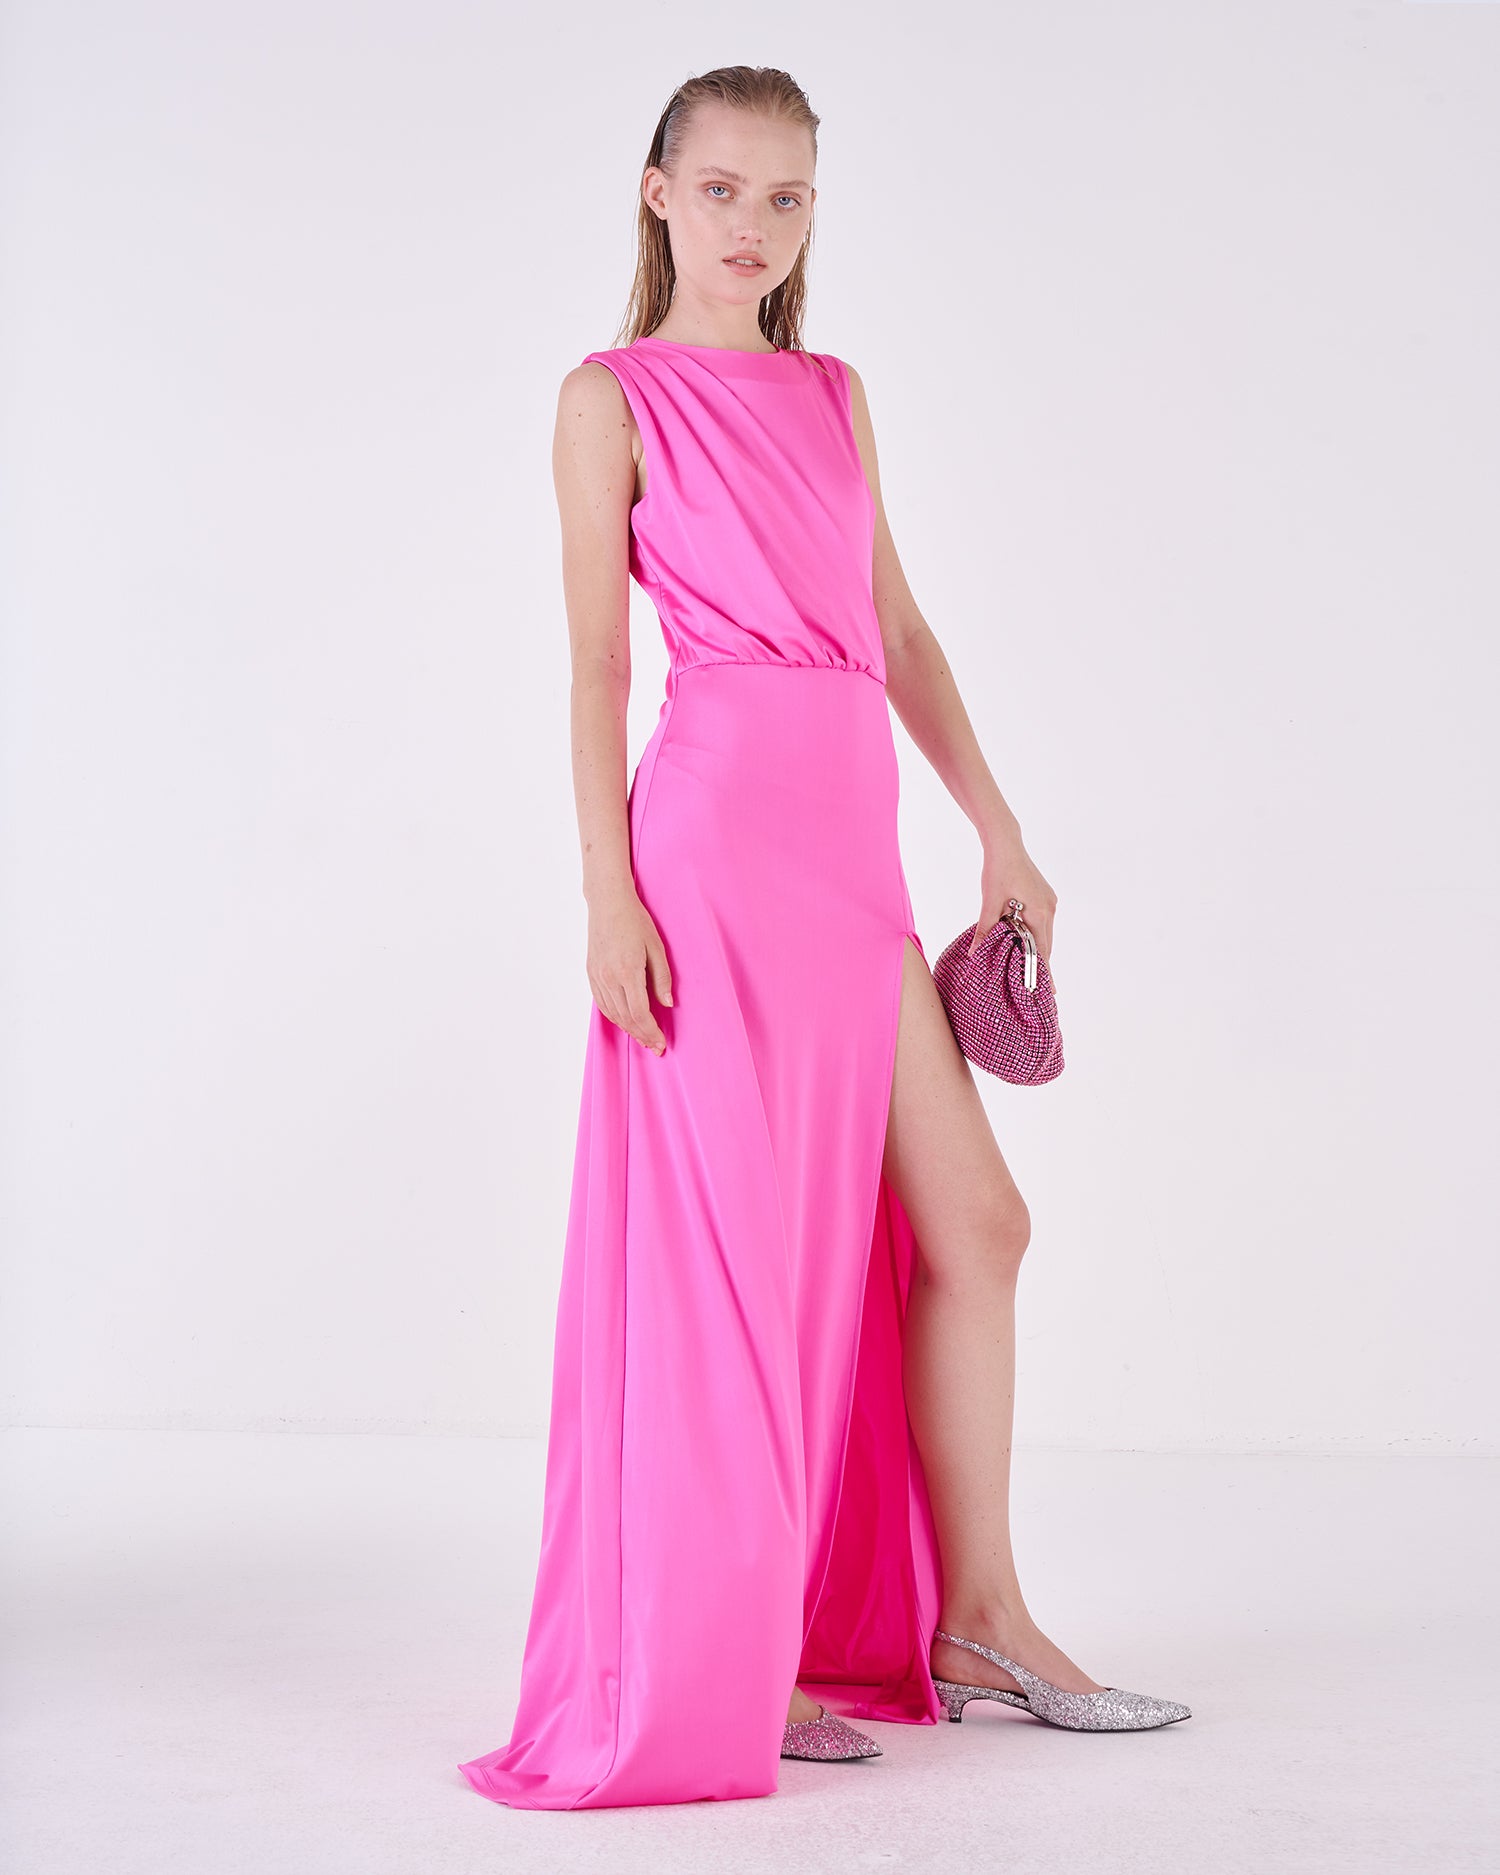 Long dress with side slit